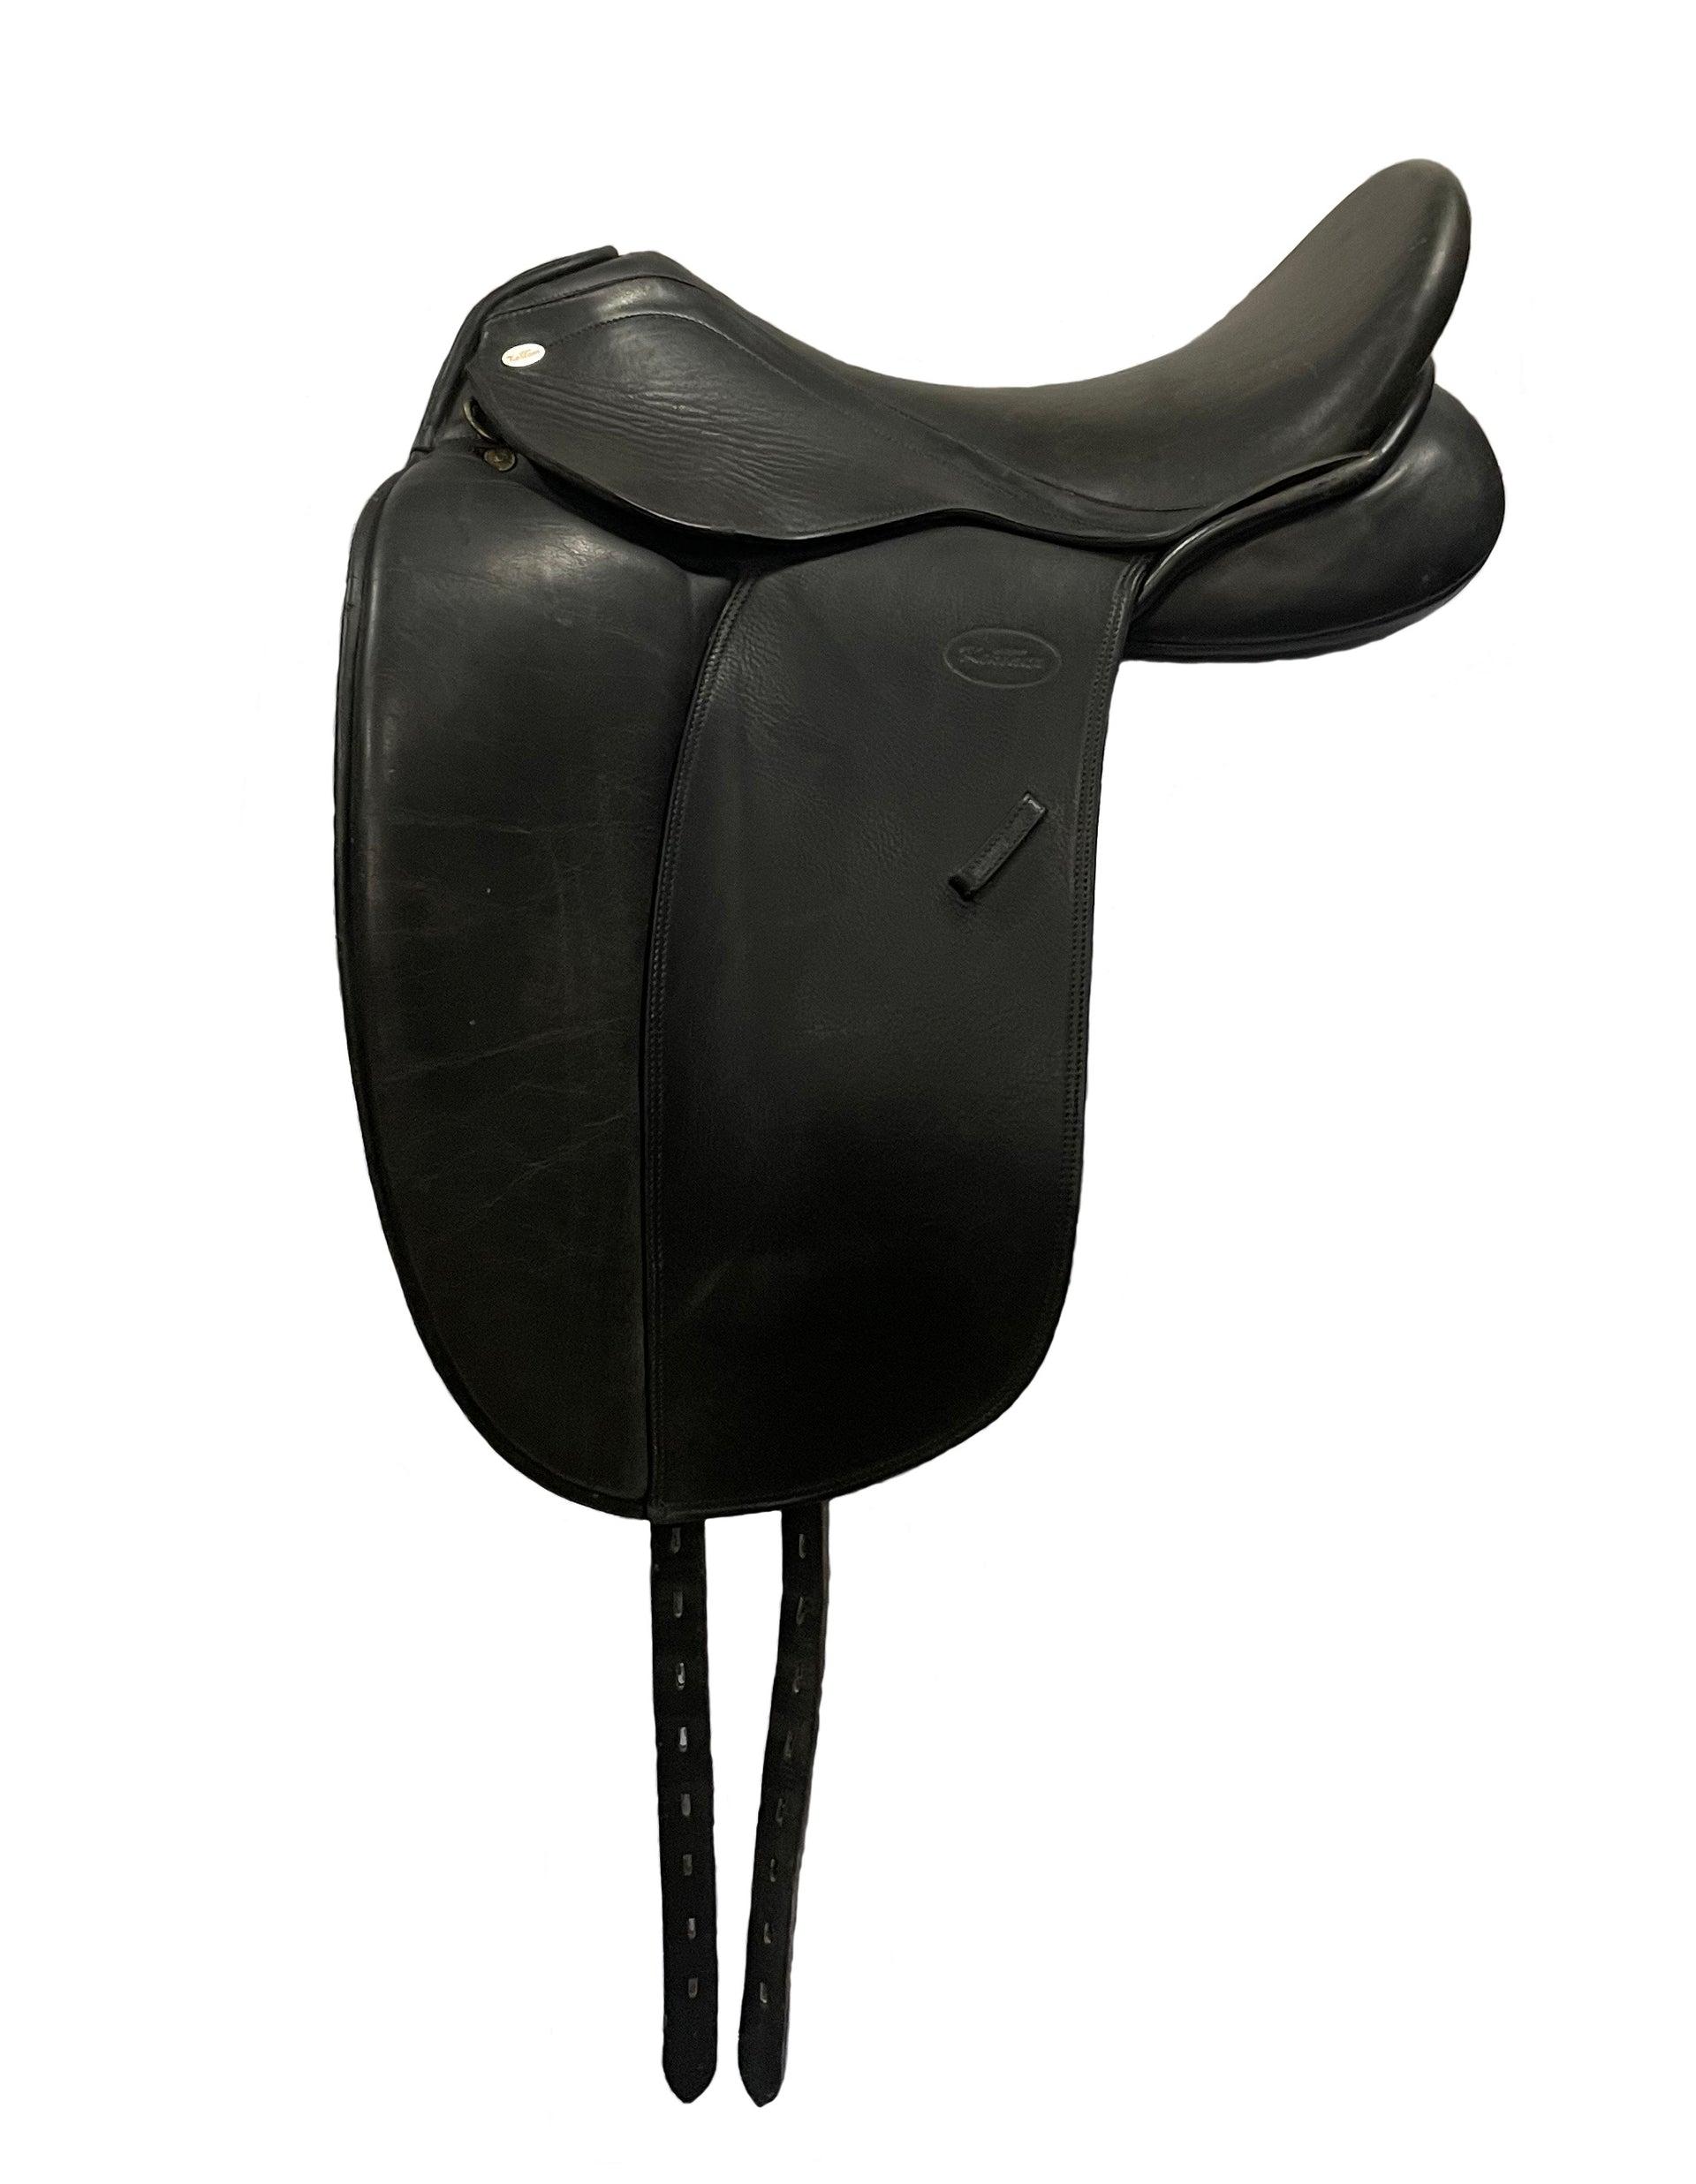 Kentaur Medea Dressage Saddle 18inch Second Hand - The Trading Stables